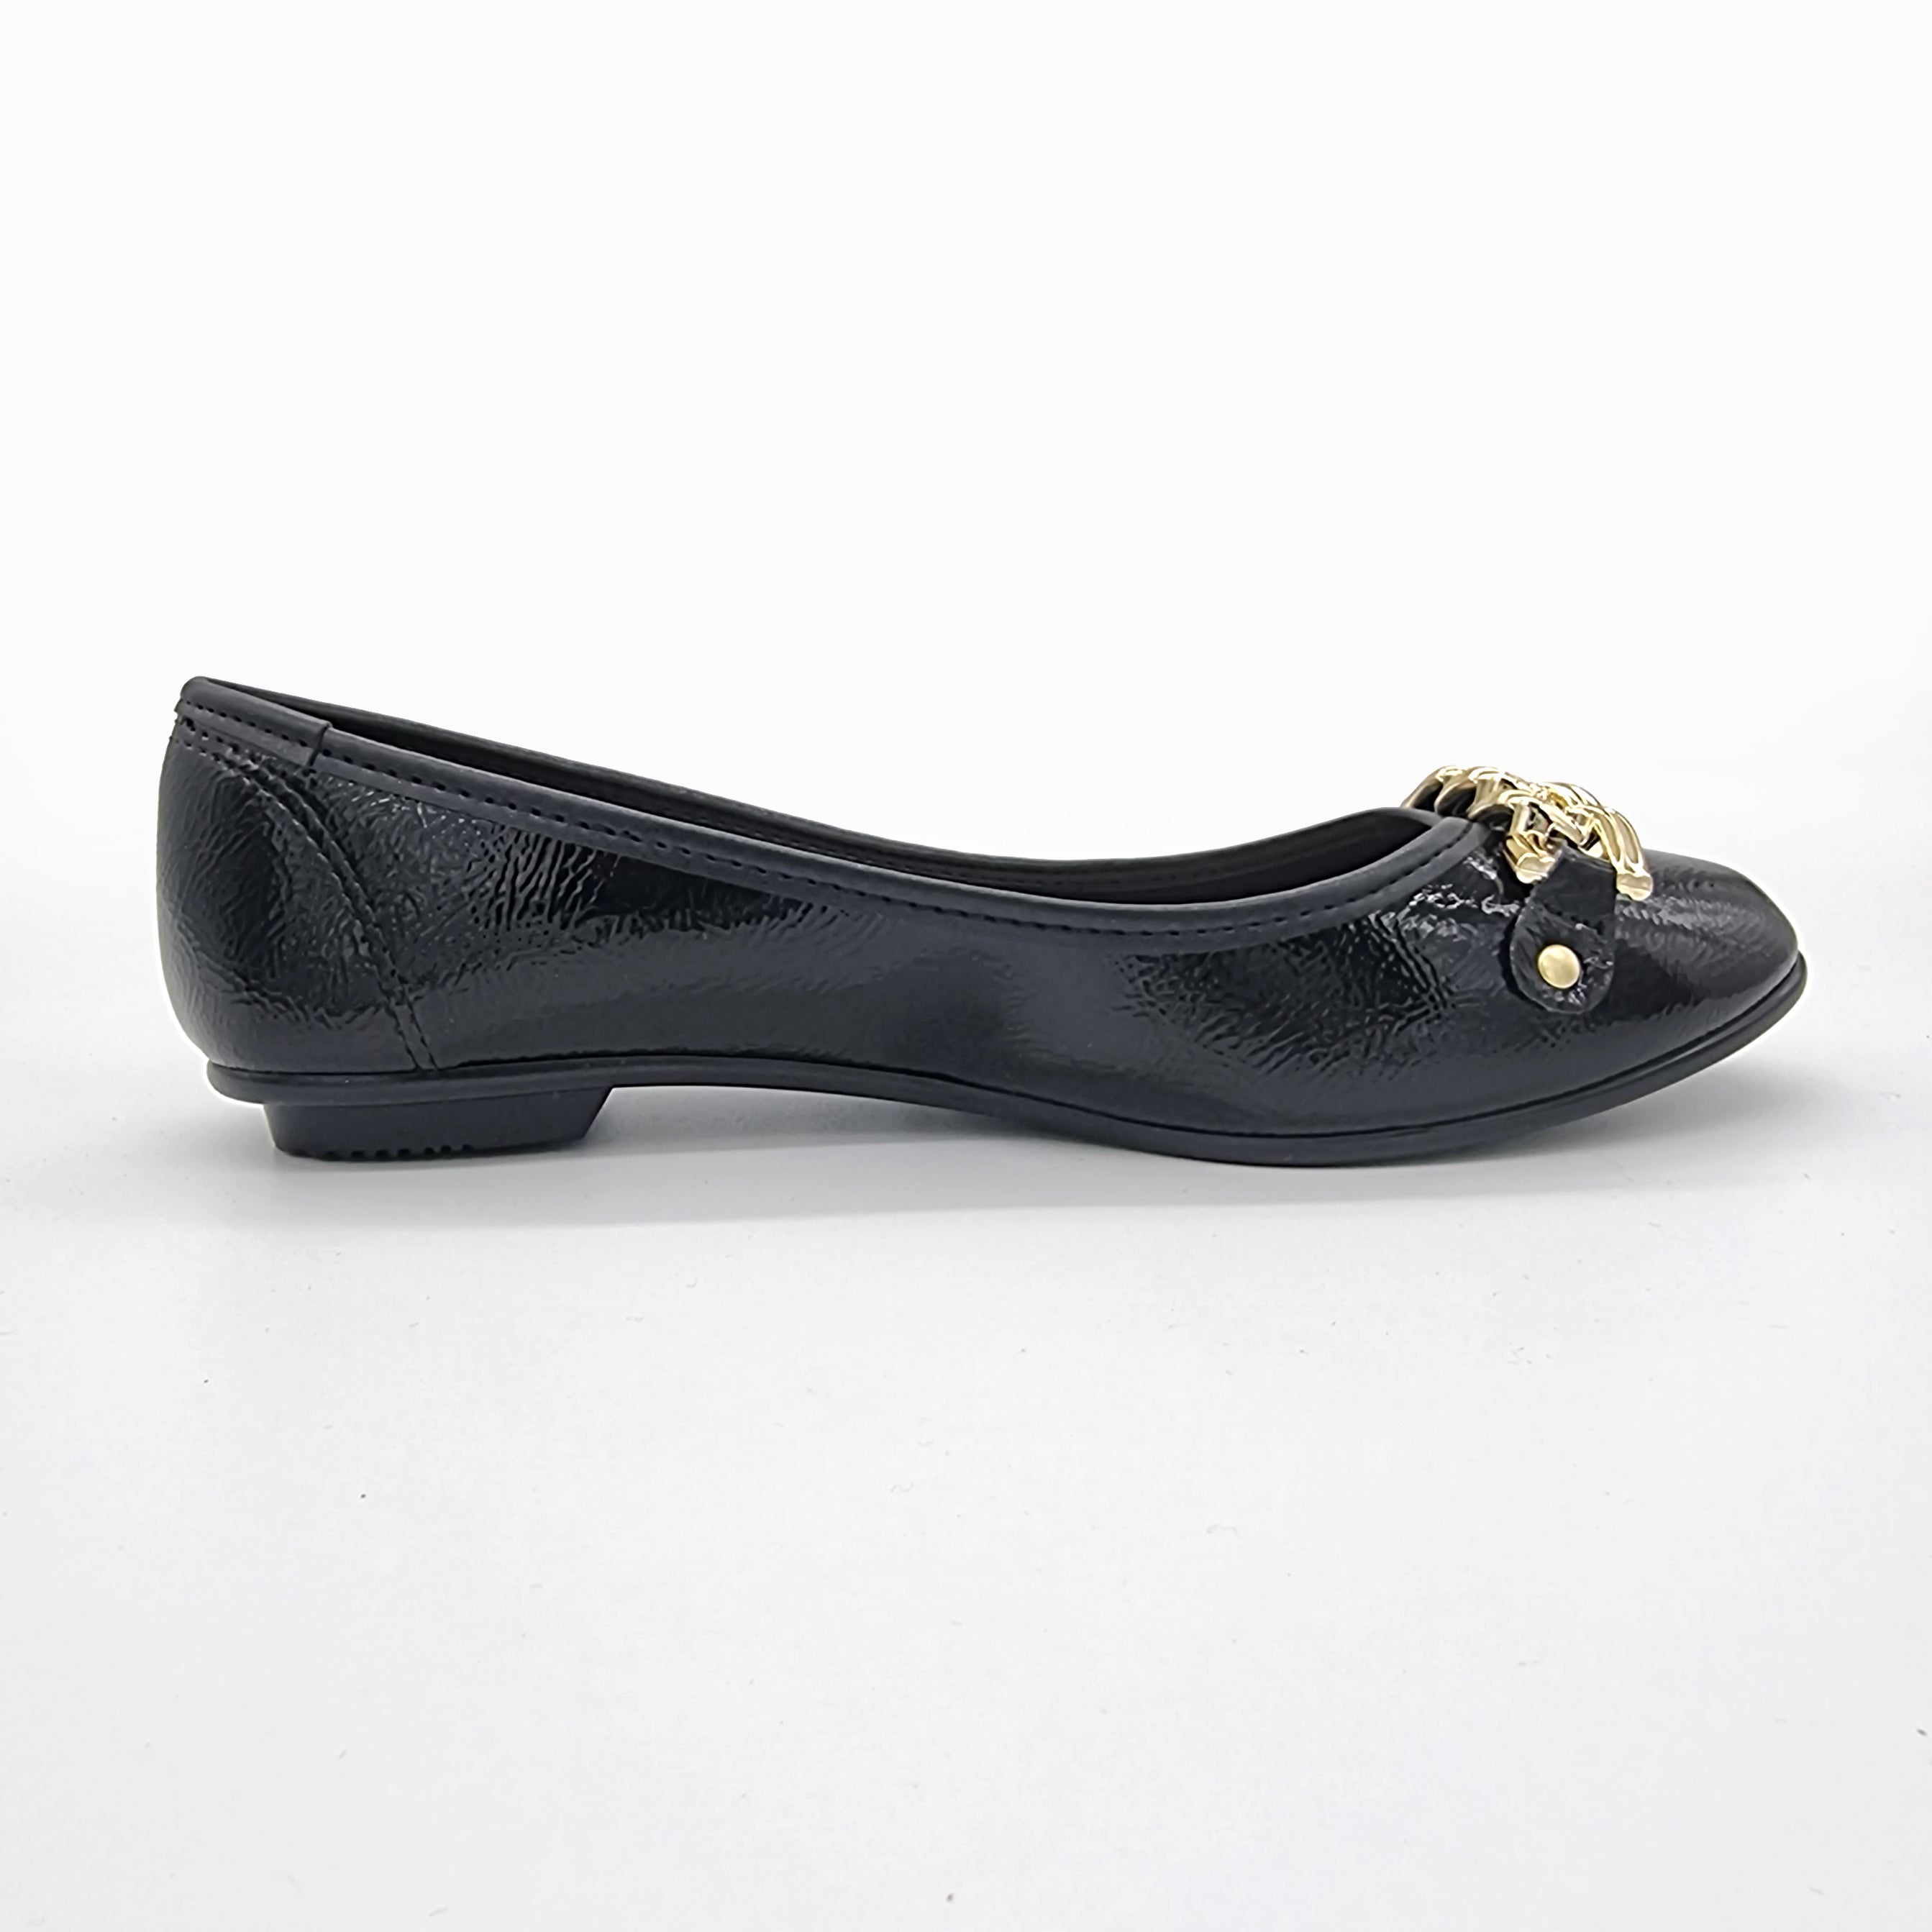 Moleca 5027-1444 Round Toe Ballerina Flat in Black Patent